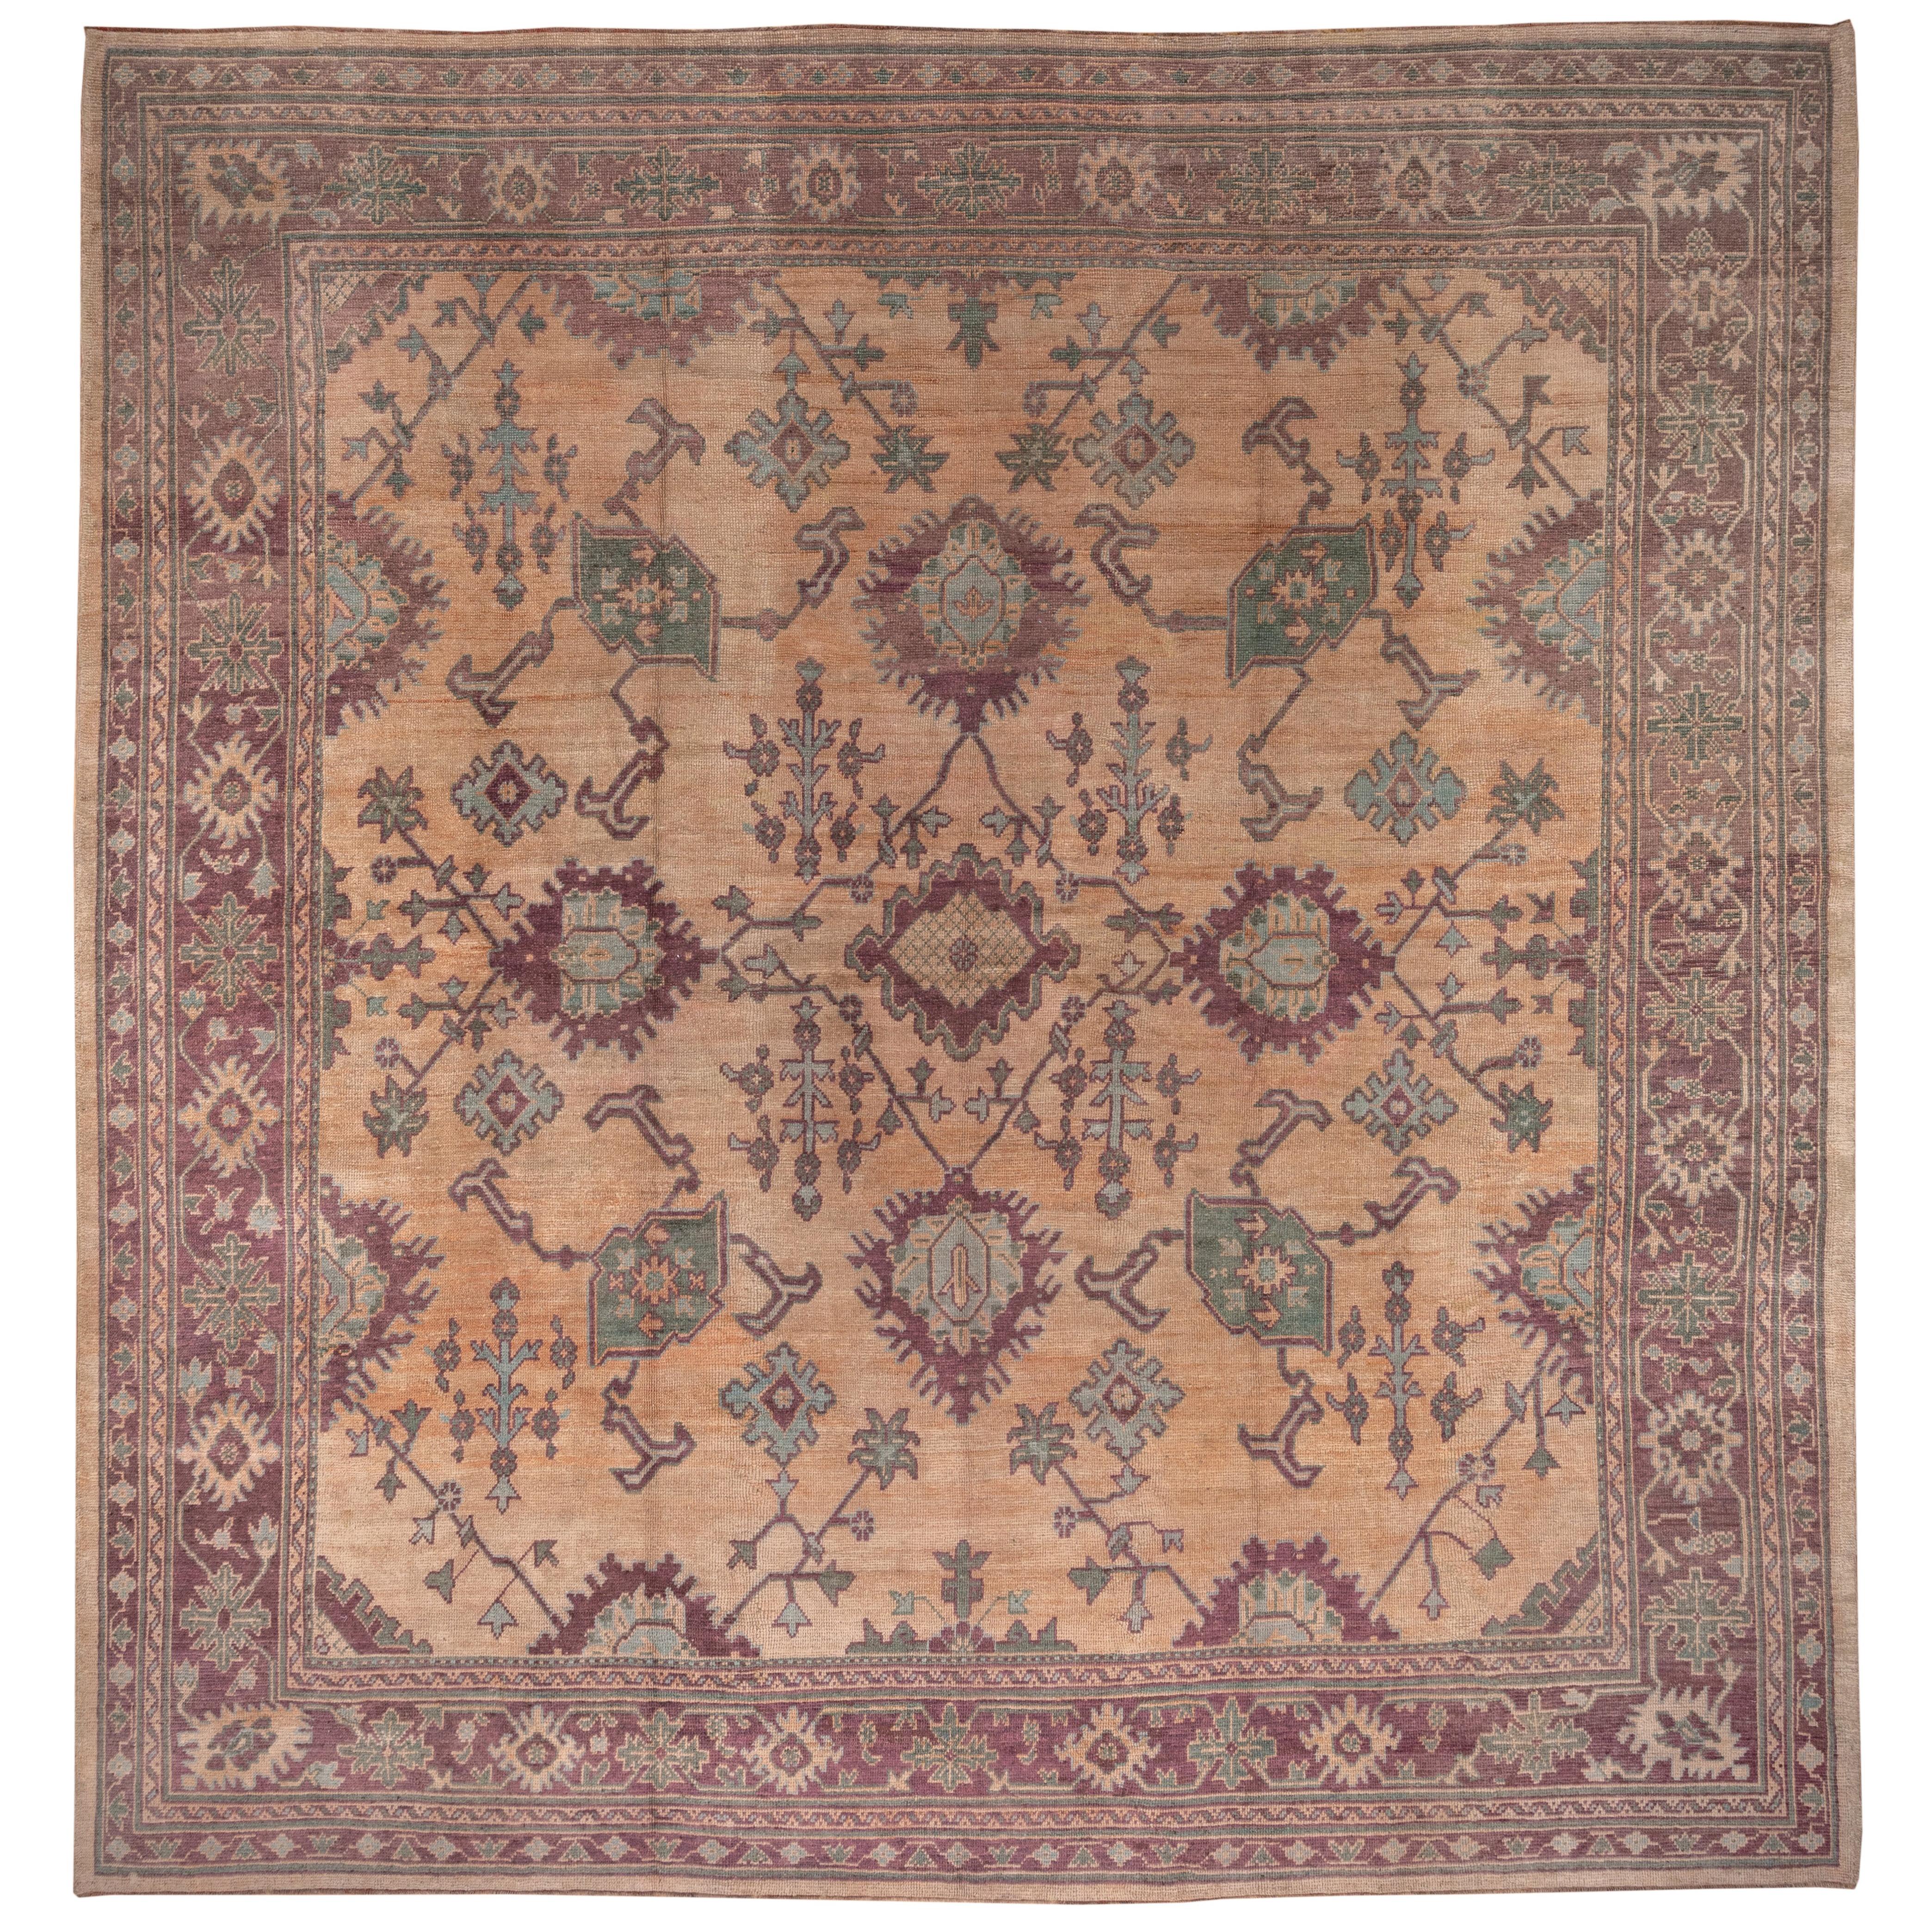 Square Antique Turkish Oushak Carpet